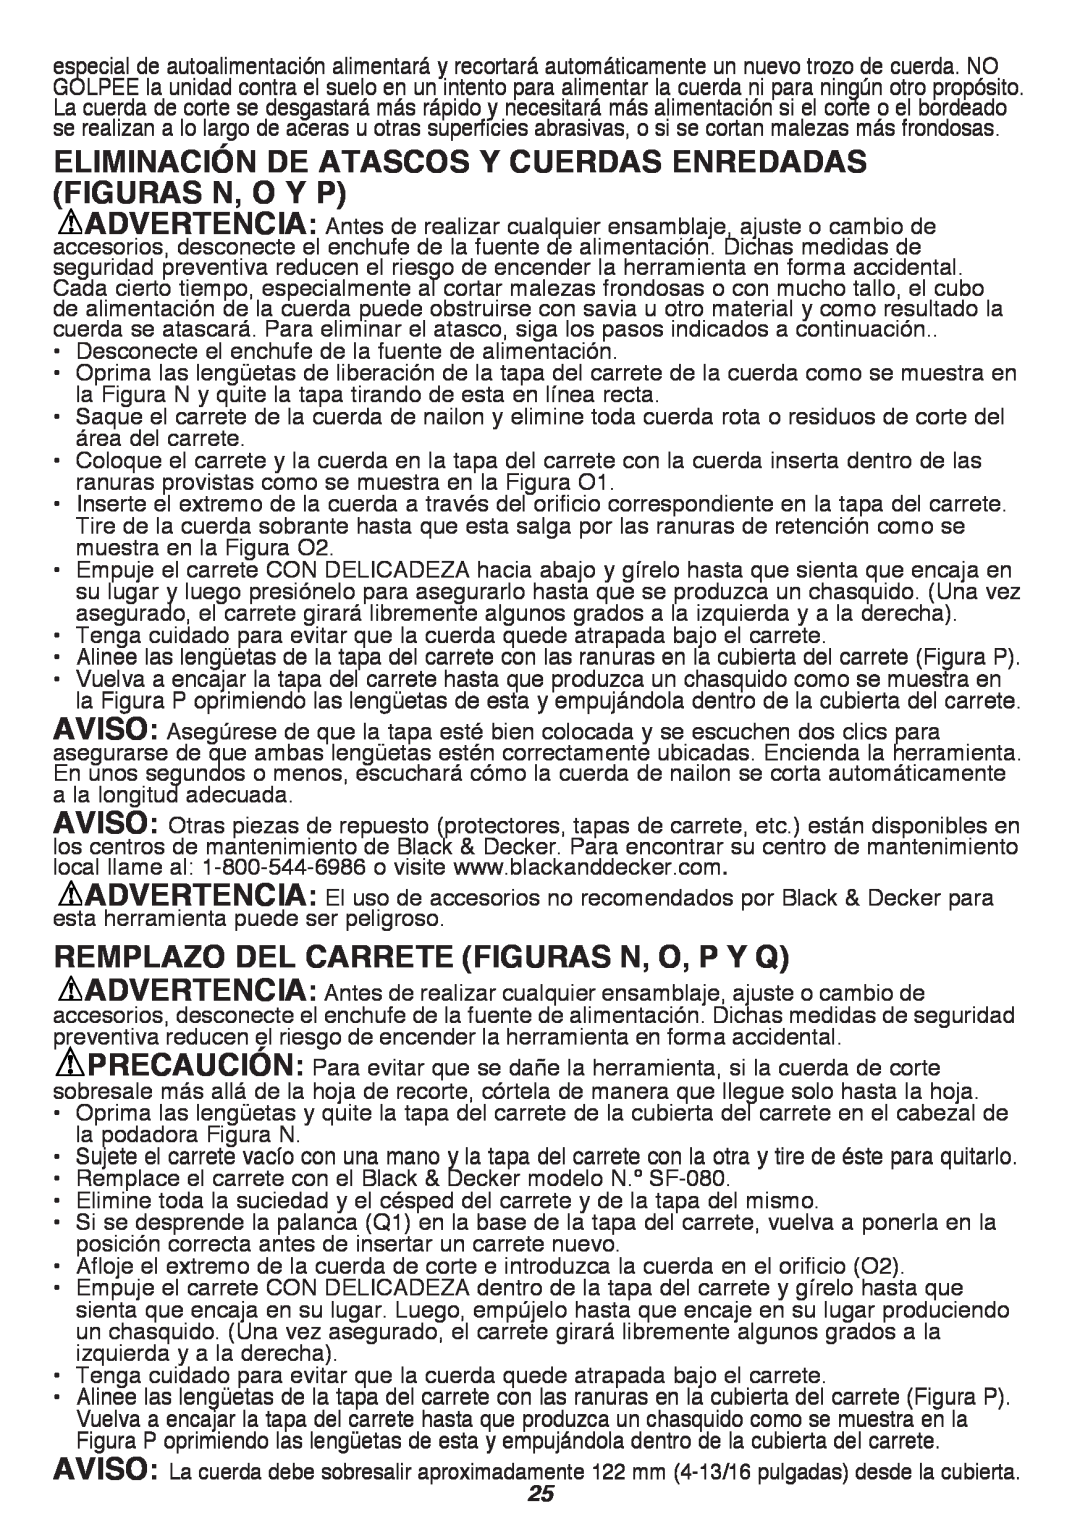 Black & Decker GH3000 instruction manual REMPLAZO DEL CARRETE figurAs N, O, P Y Q 